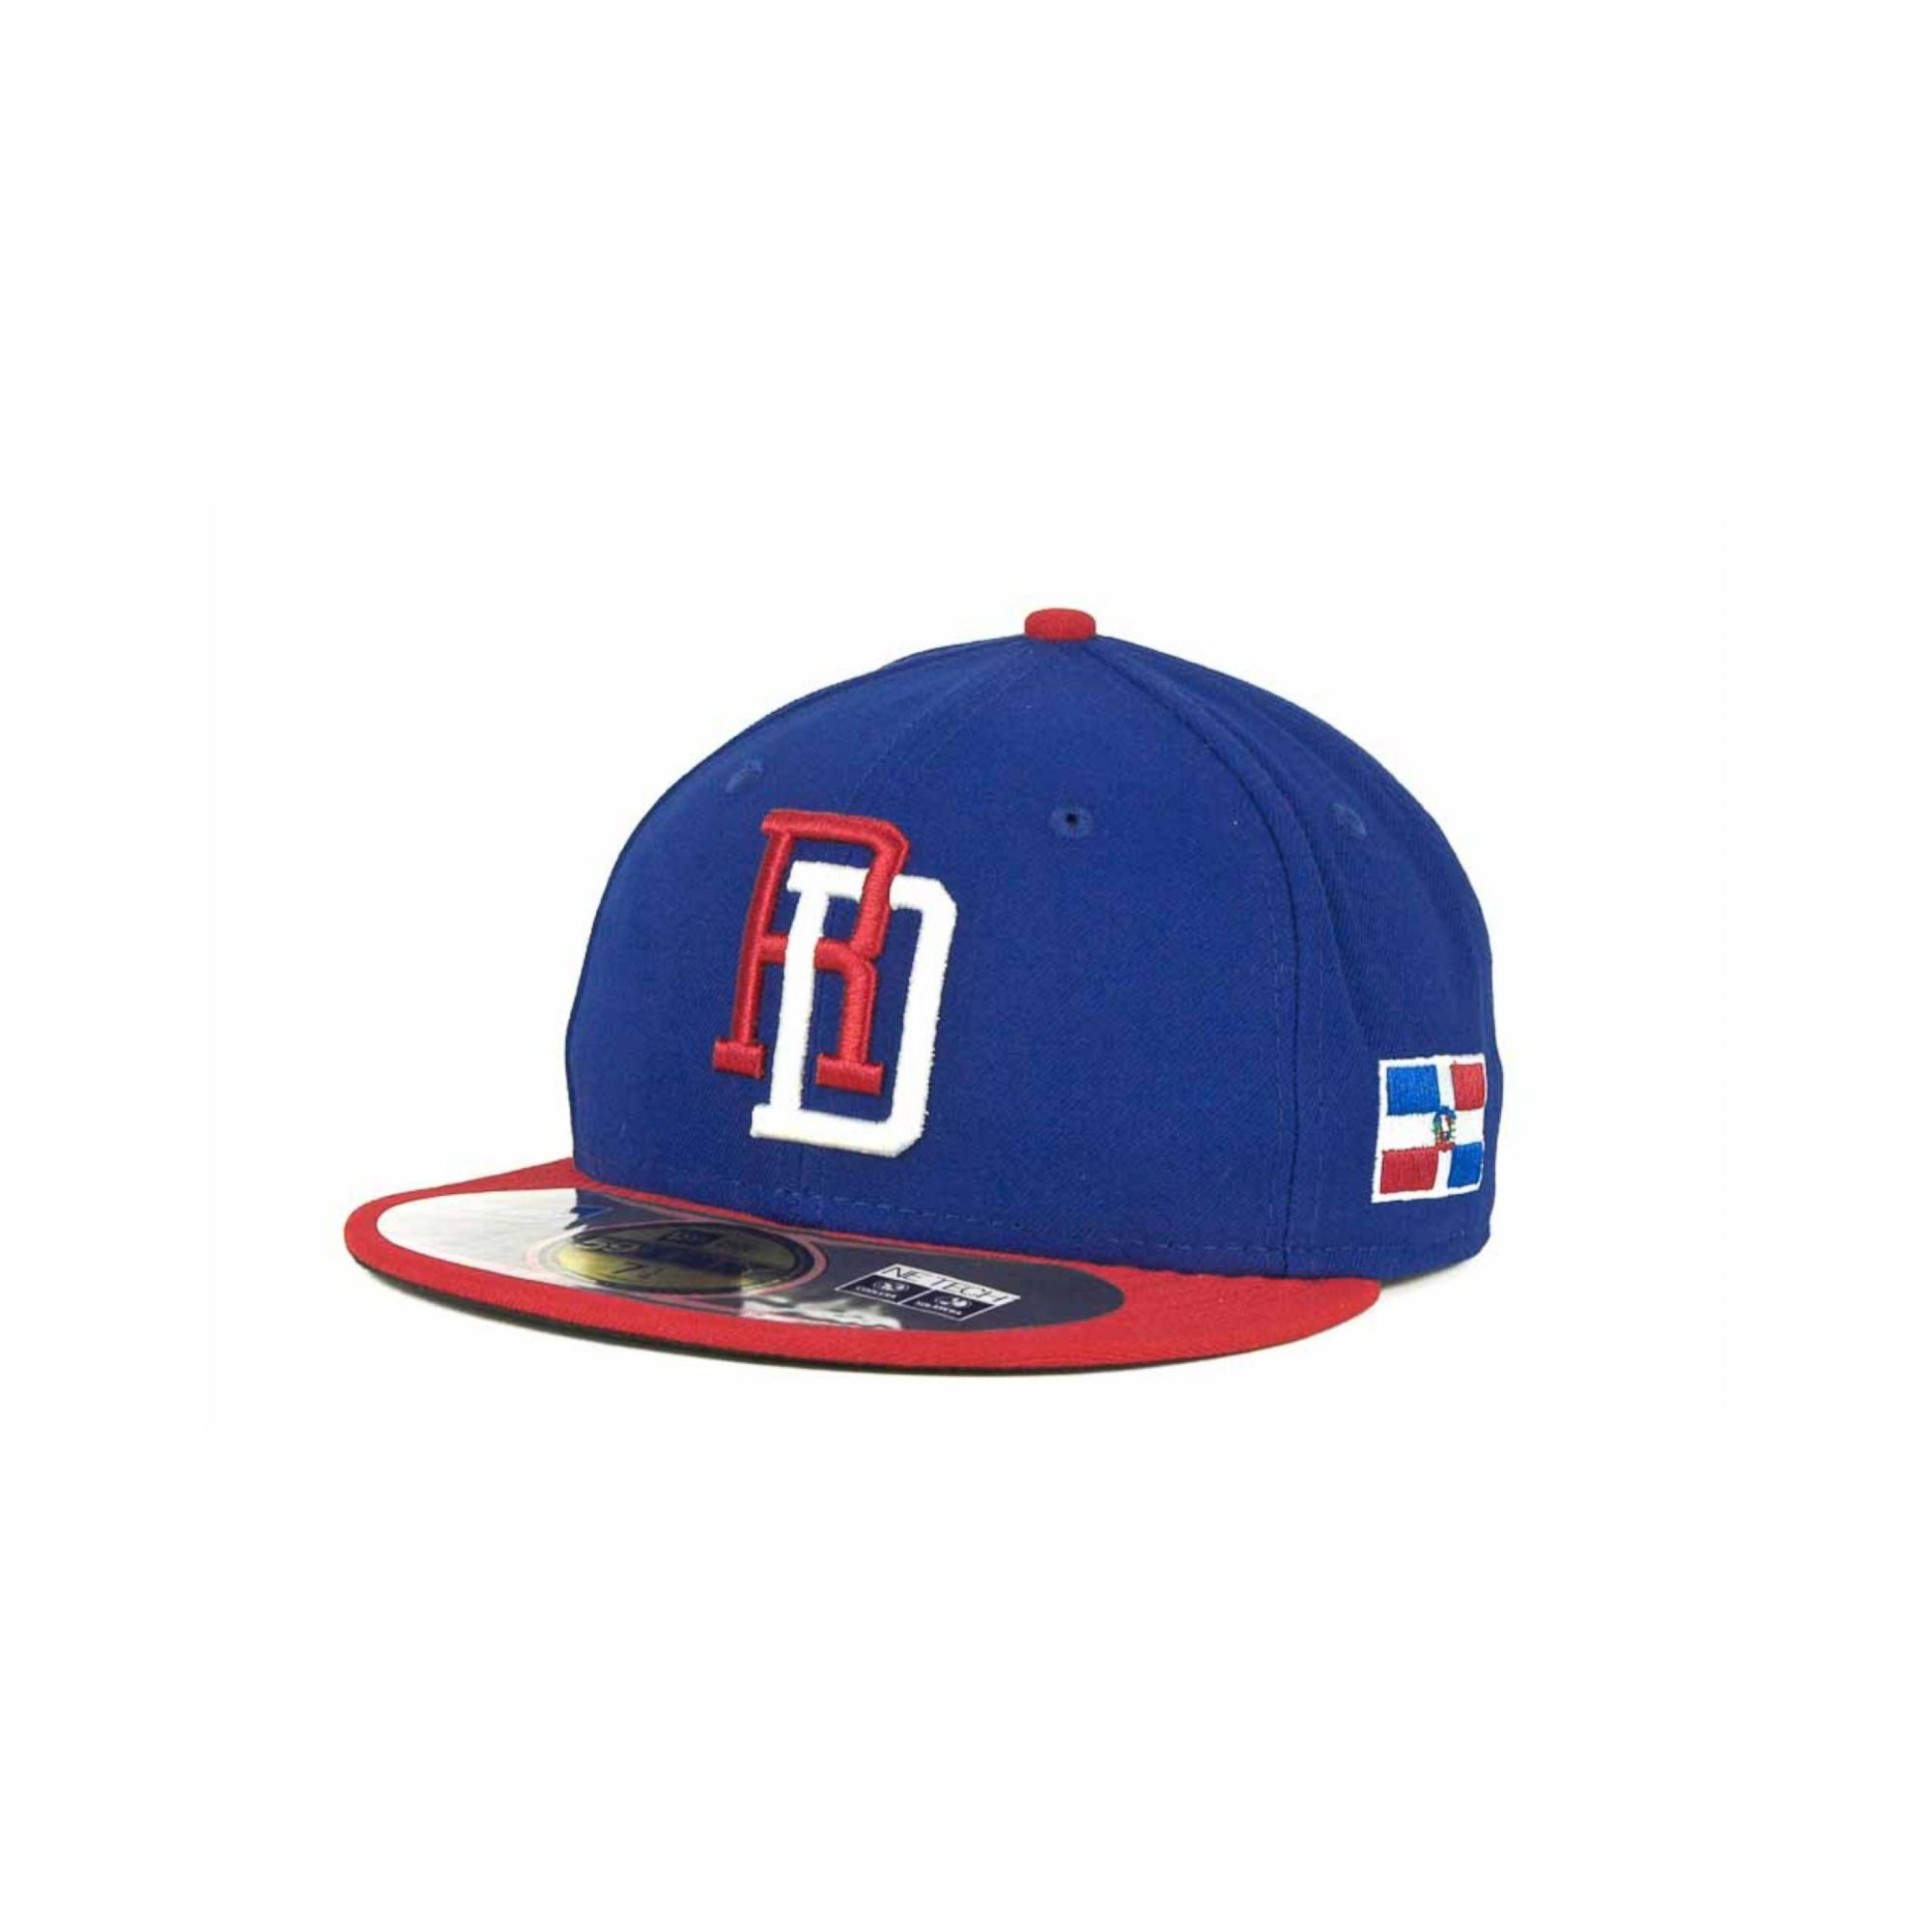 KTZ Dominican Republic World Baseball Classic 59fifty Cap in Blue for Men